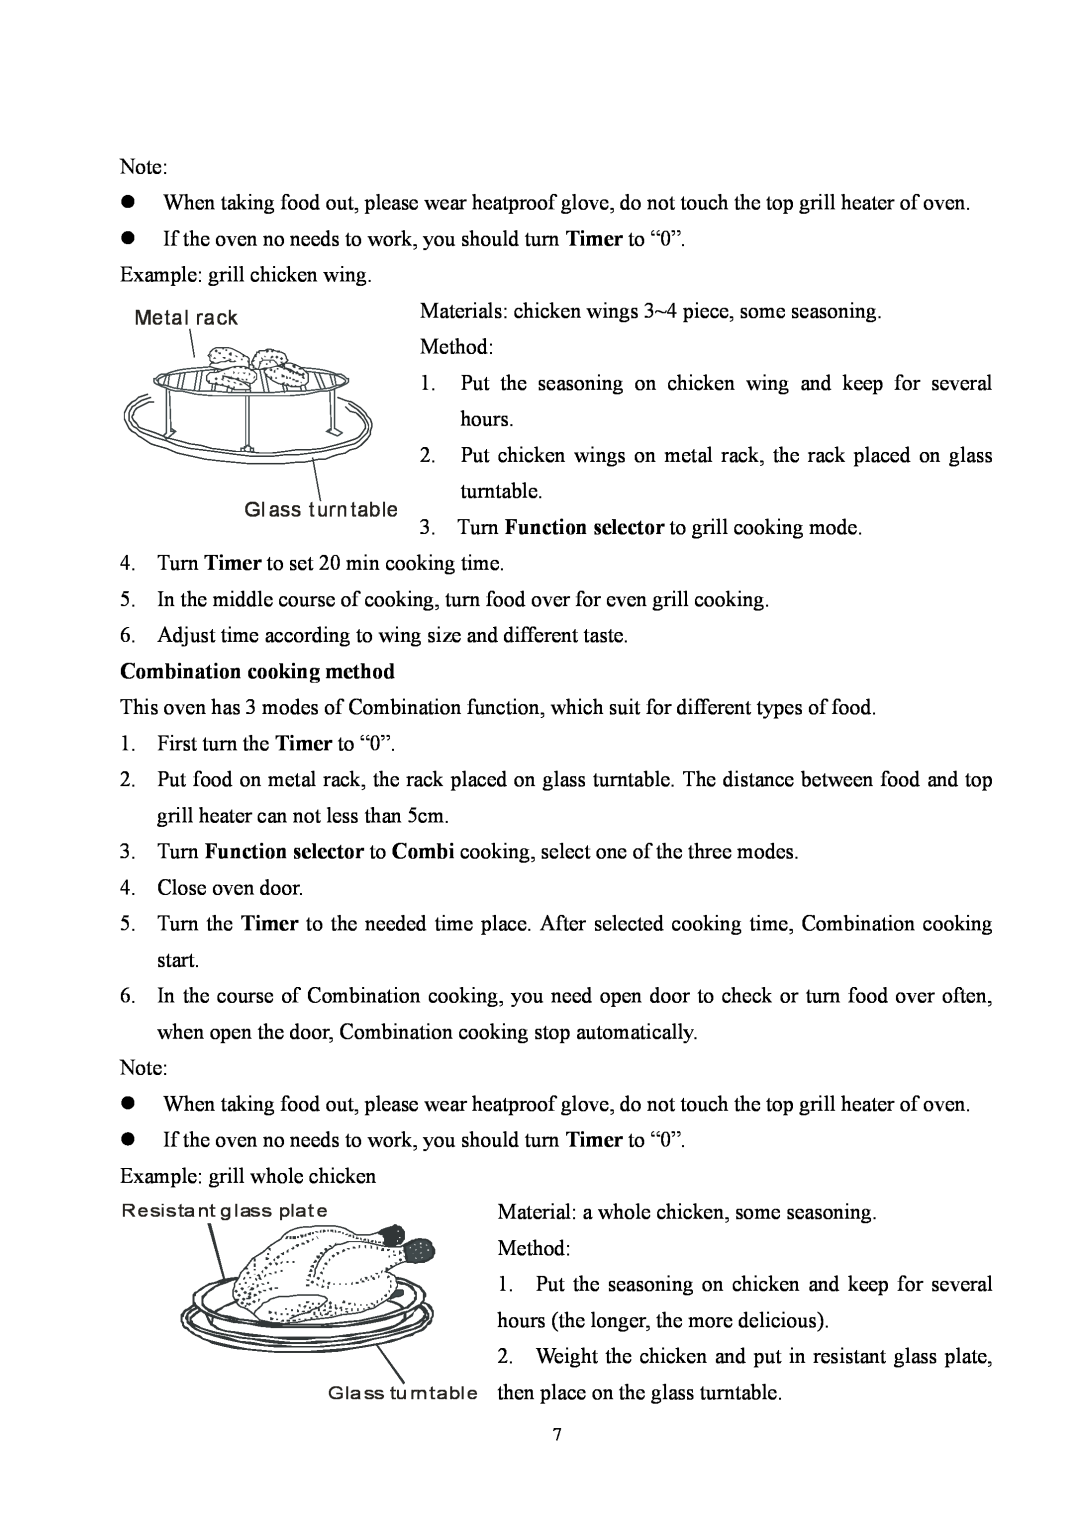 Whirlpool MWO 605 manual Combination cooking method, Gl ass turn table 